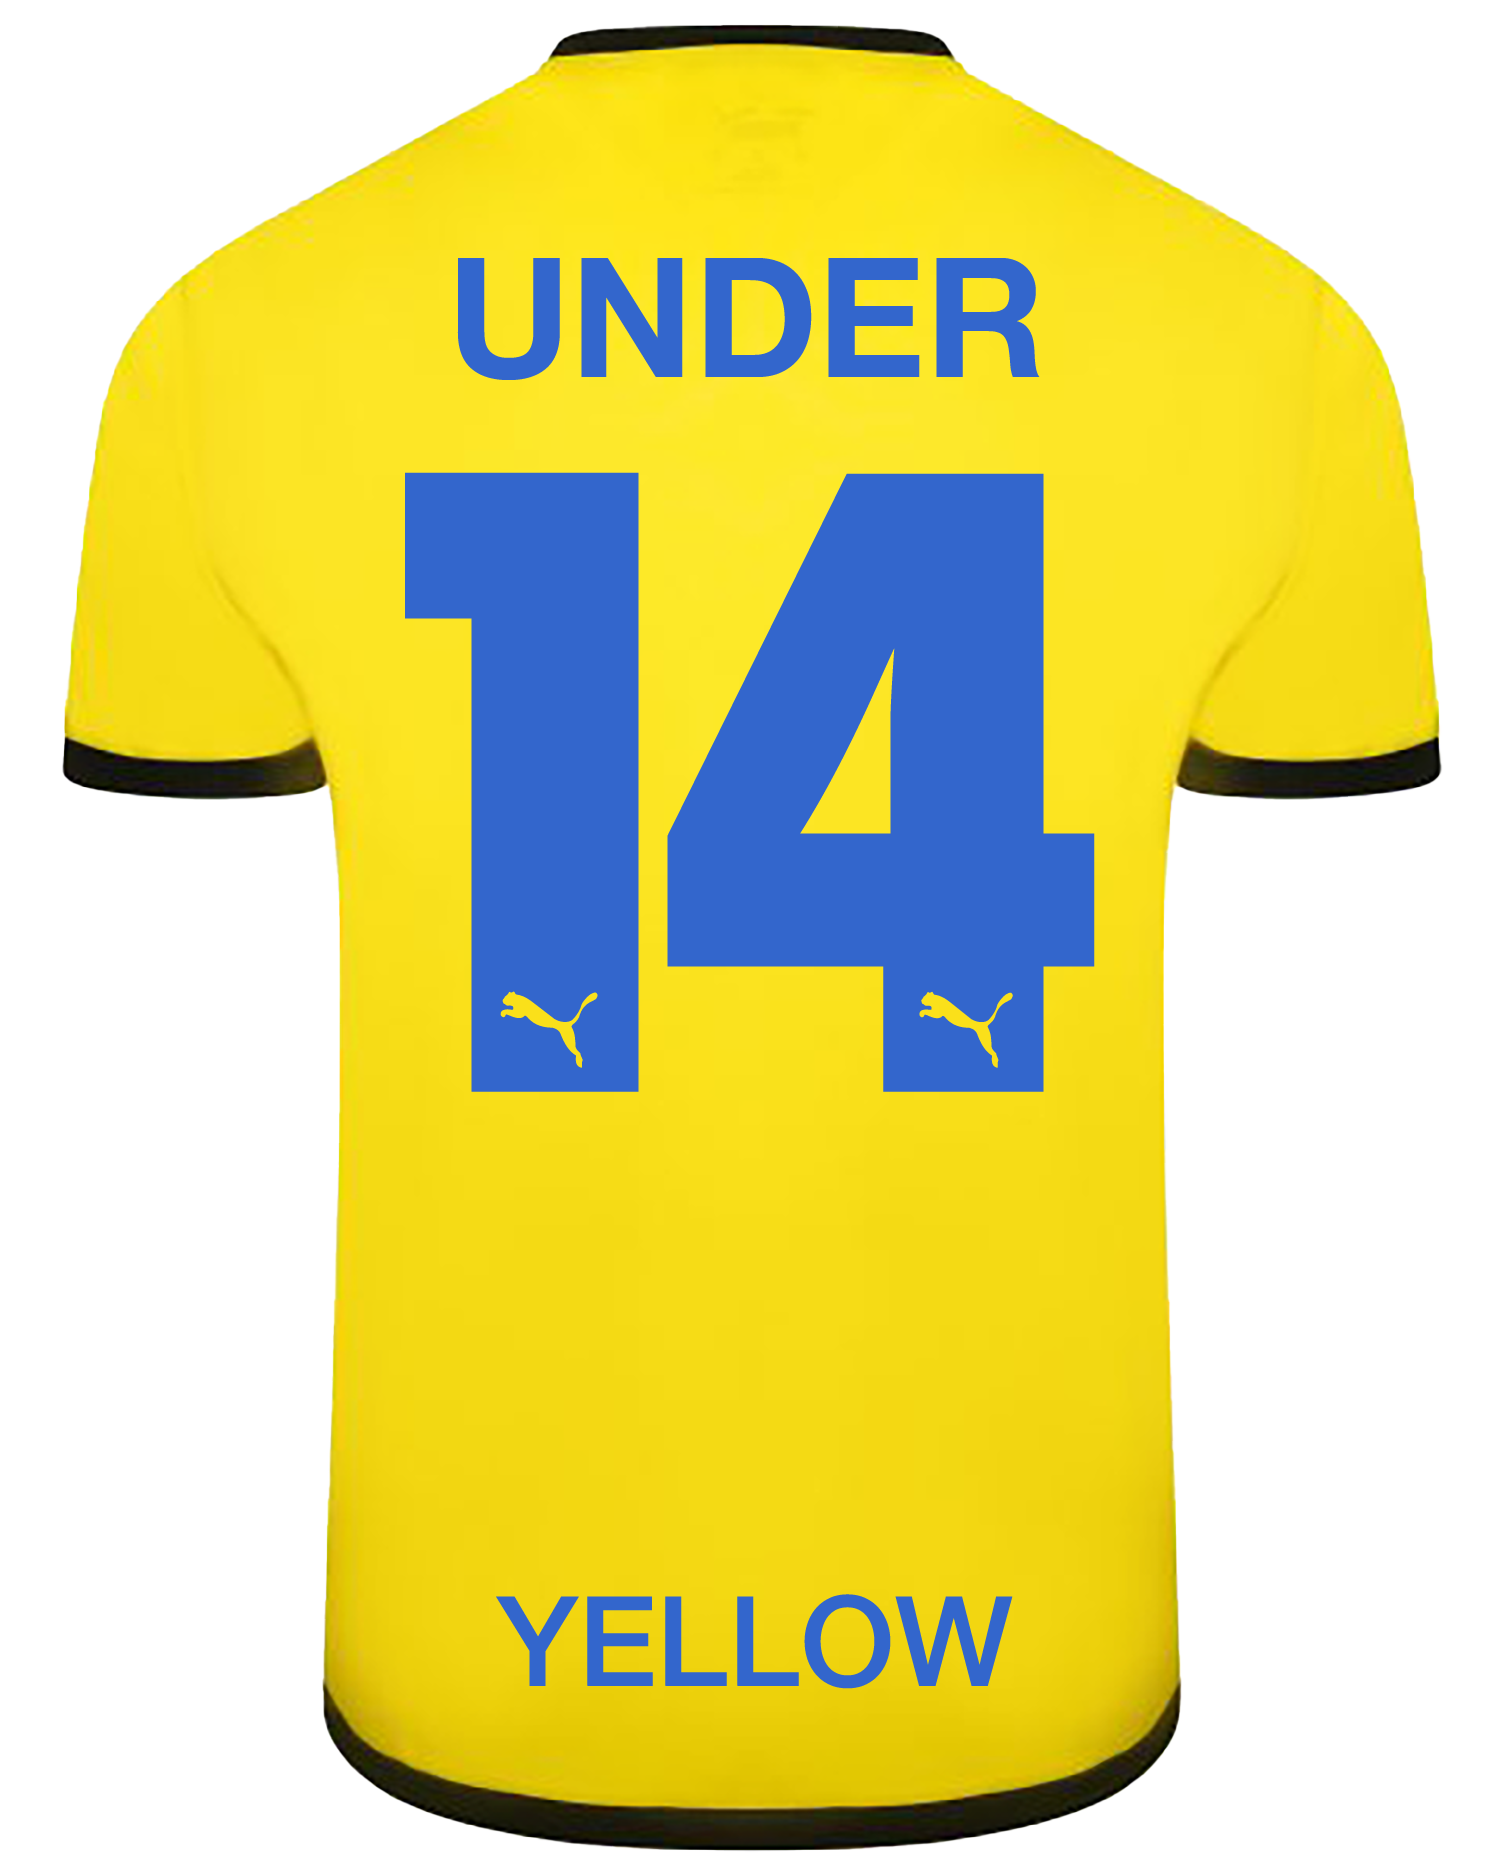 Under 14 (Yellow)